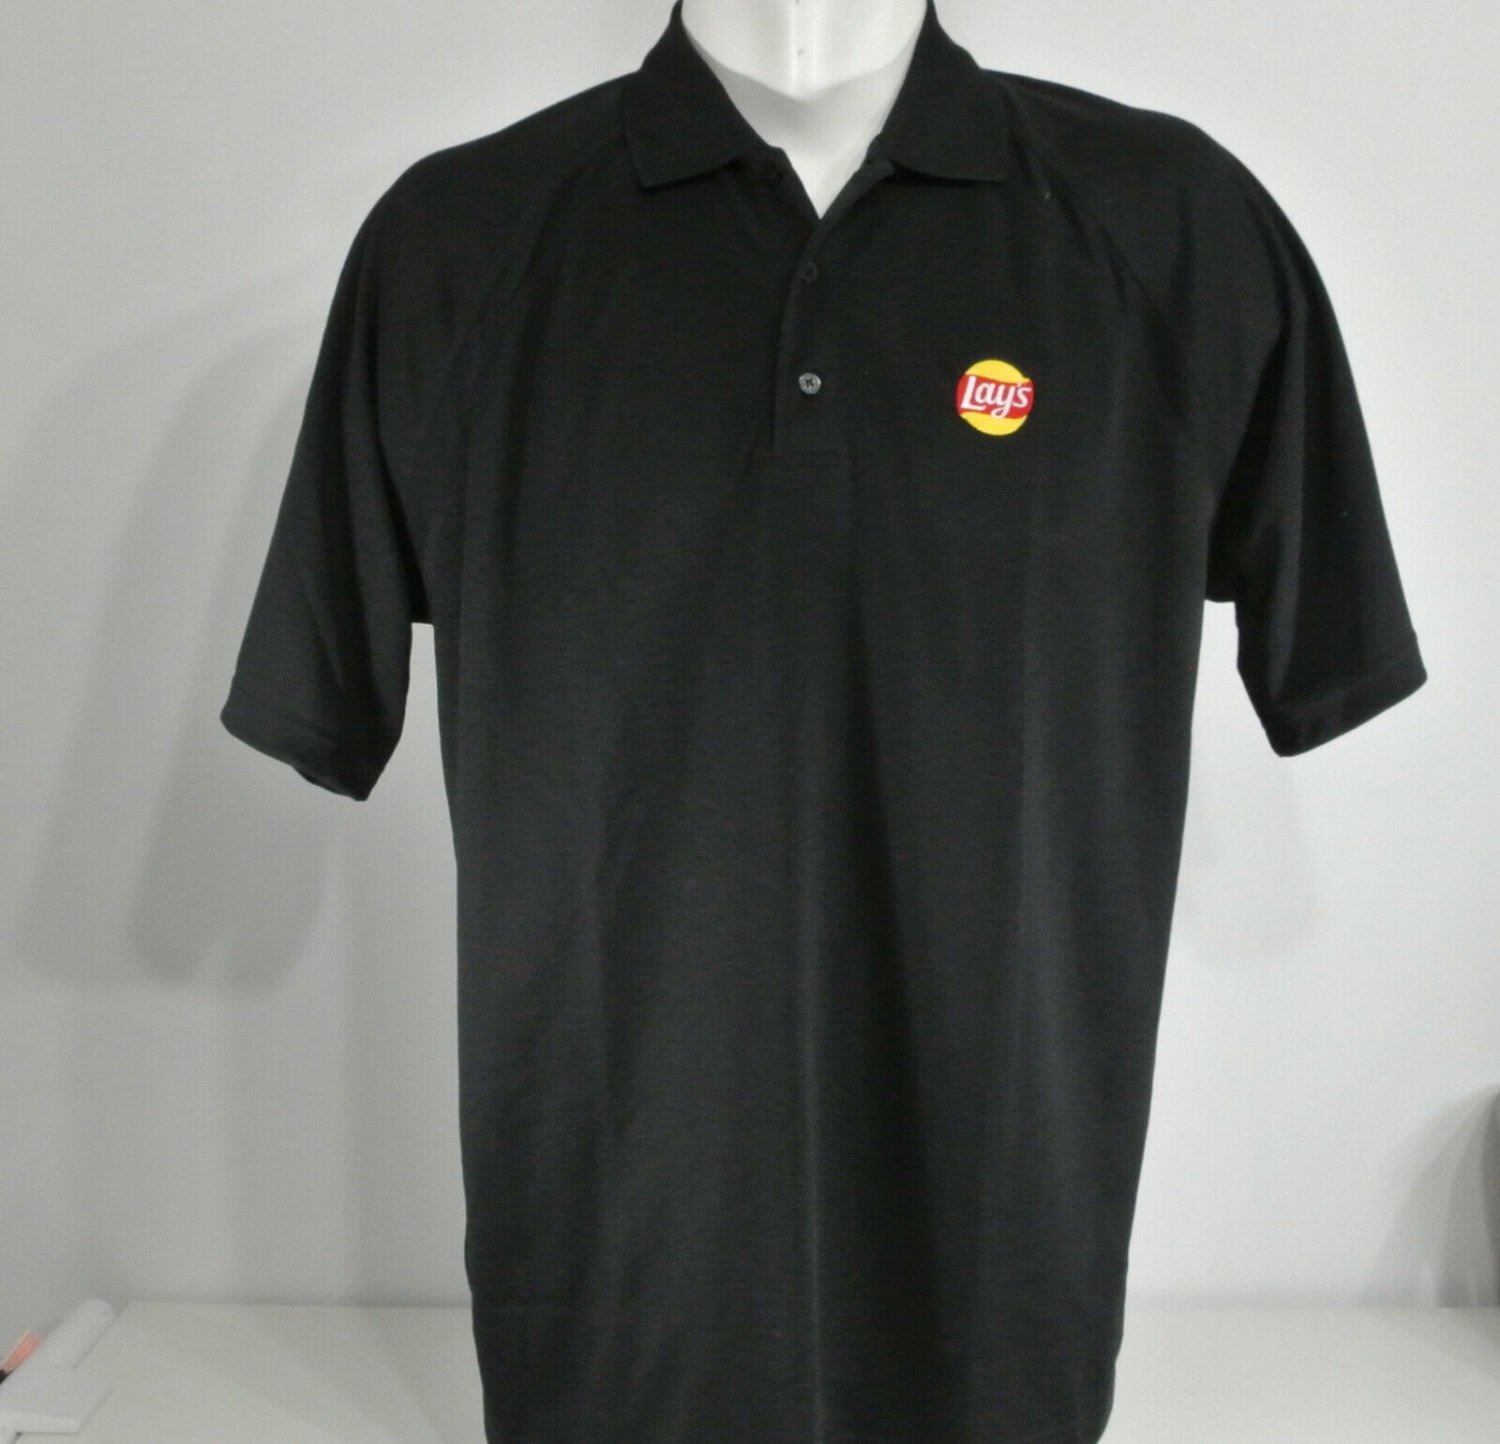 LAY'S Frito Lay Potato Chips Employee Uniform Polo Shirt Black Size XL ...